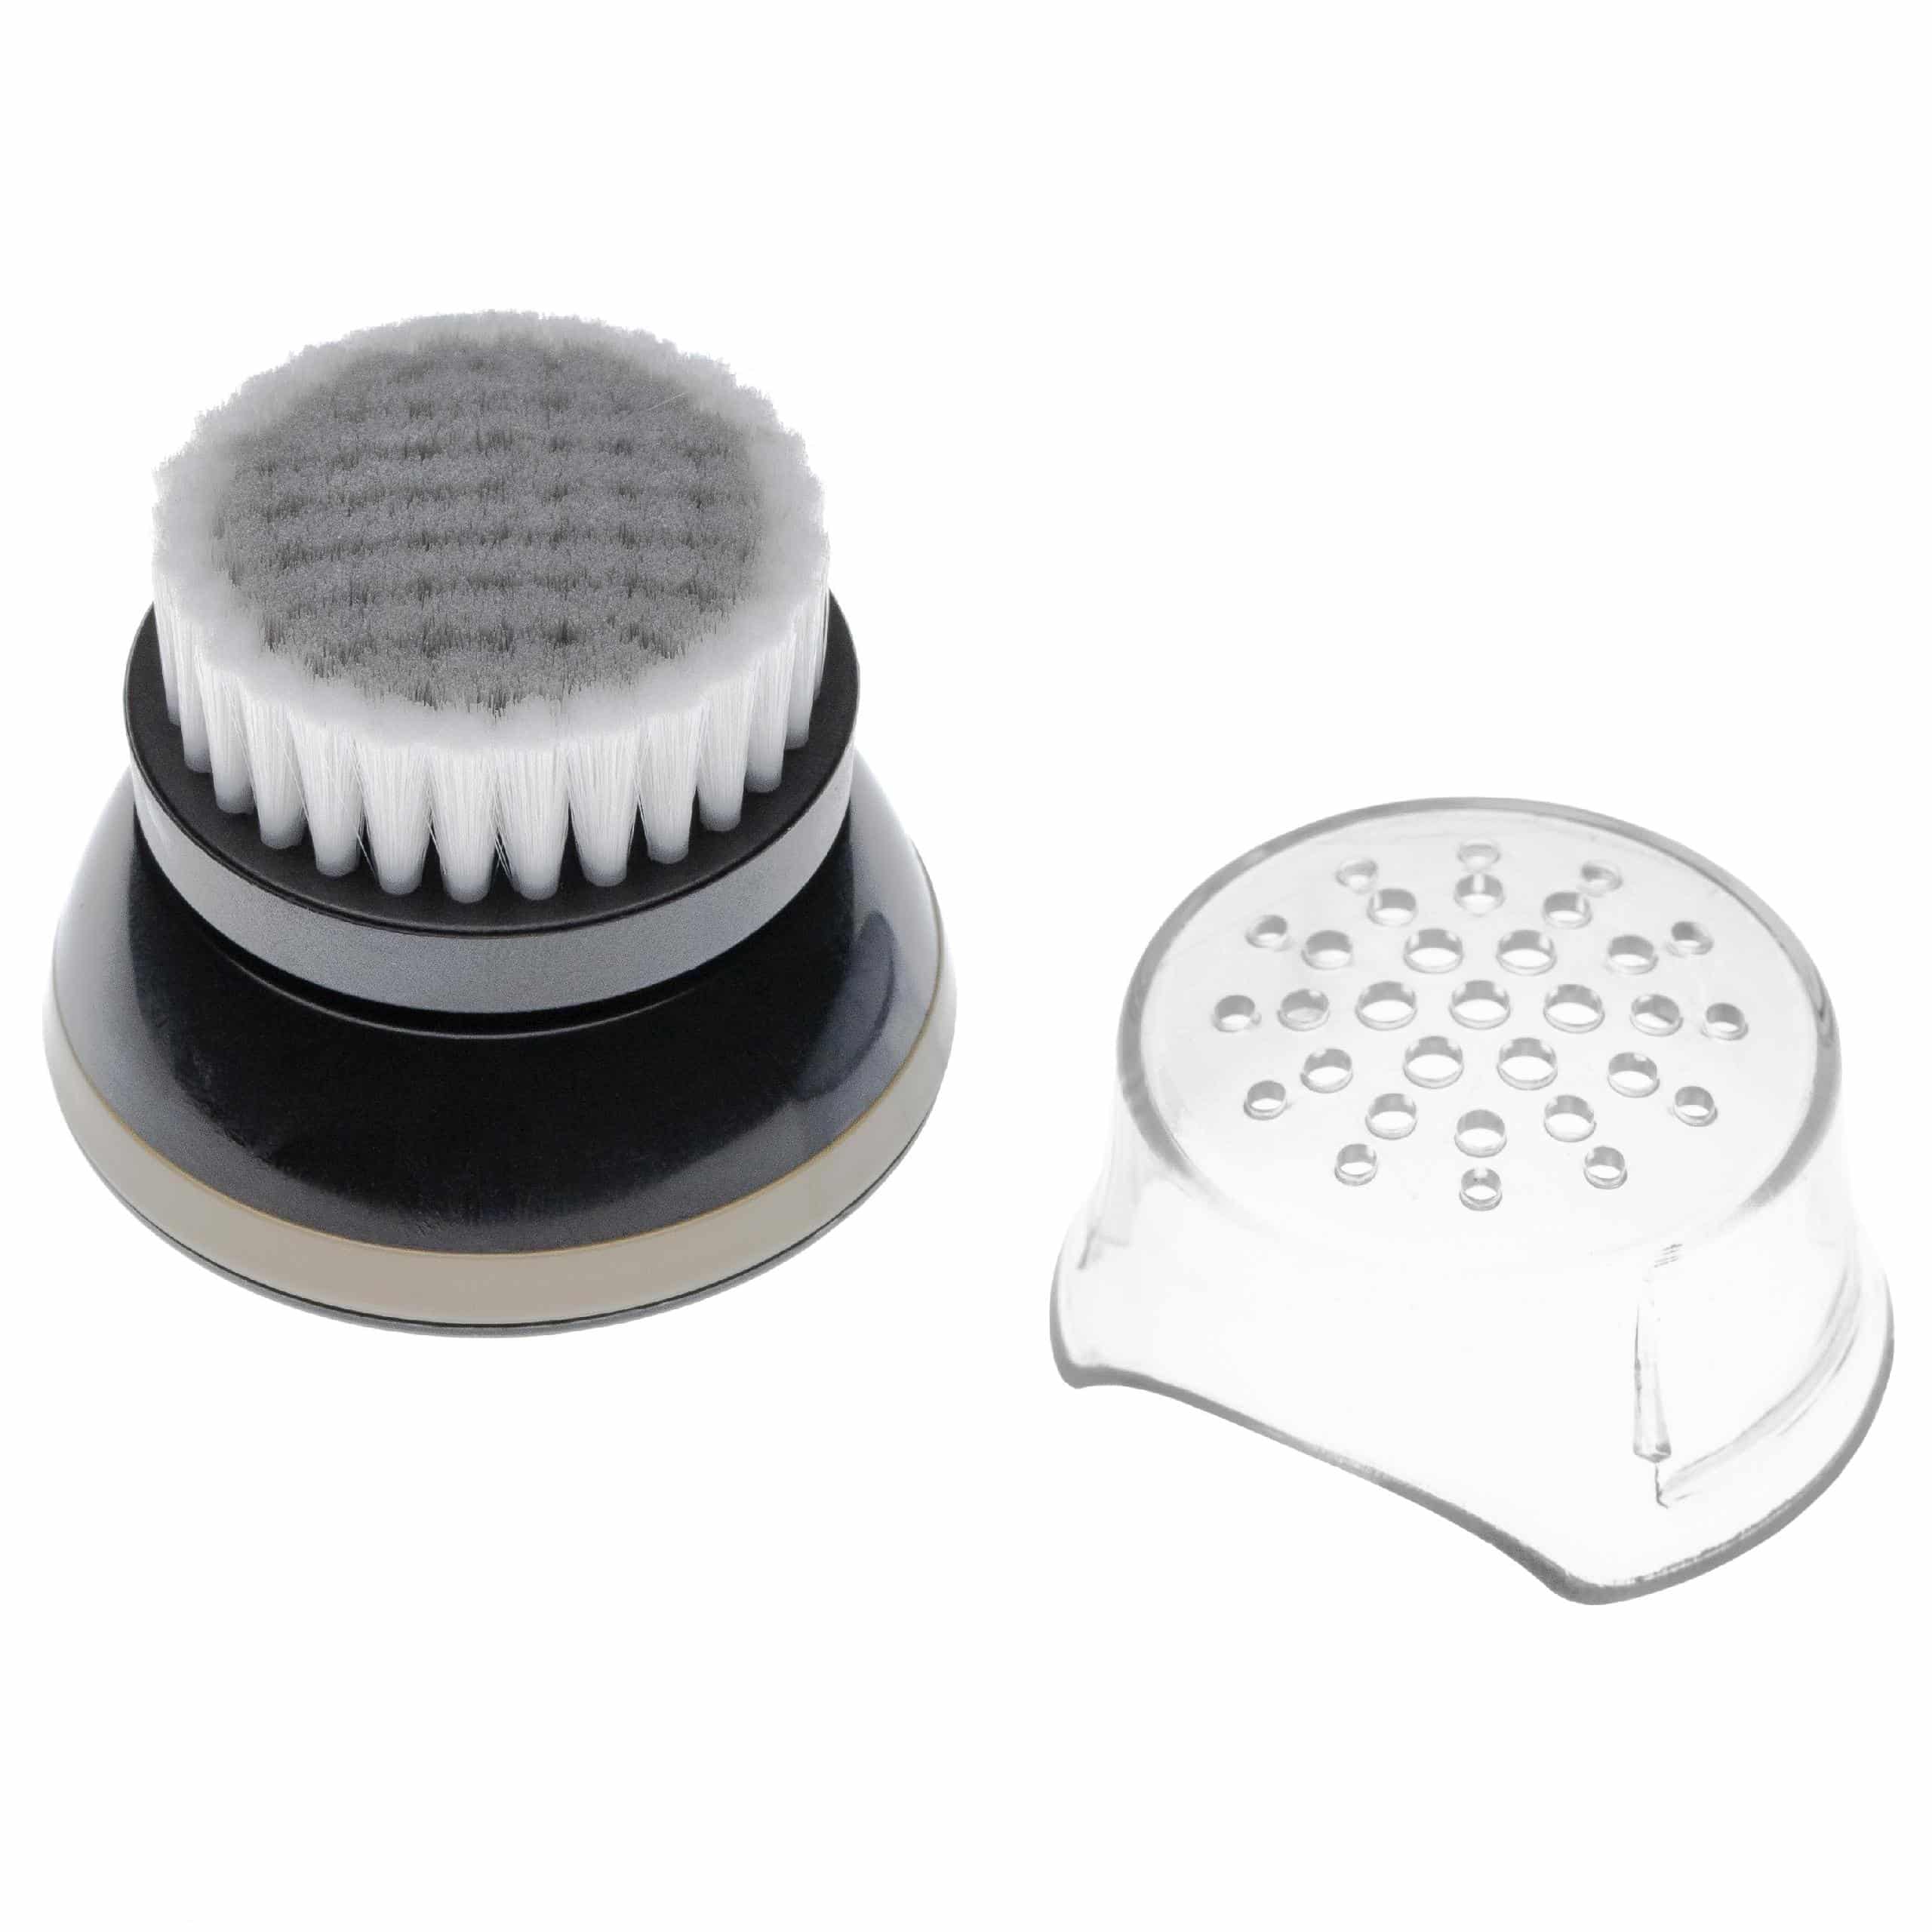 Facial Brush Head Attachment for Philips 1000 Electric Razors Etc. - Brush Attachment, Spare Head